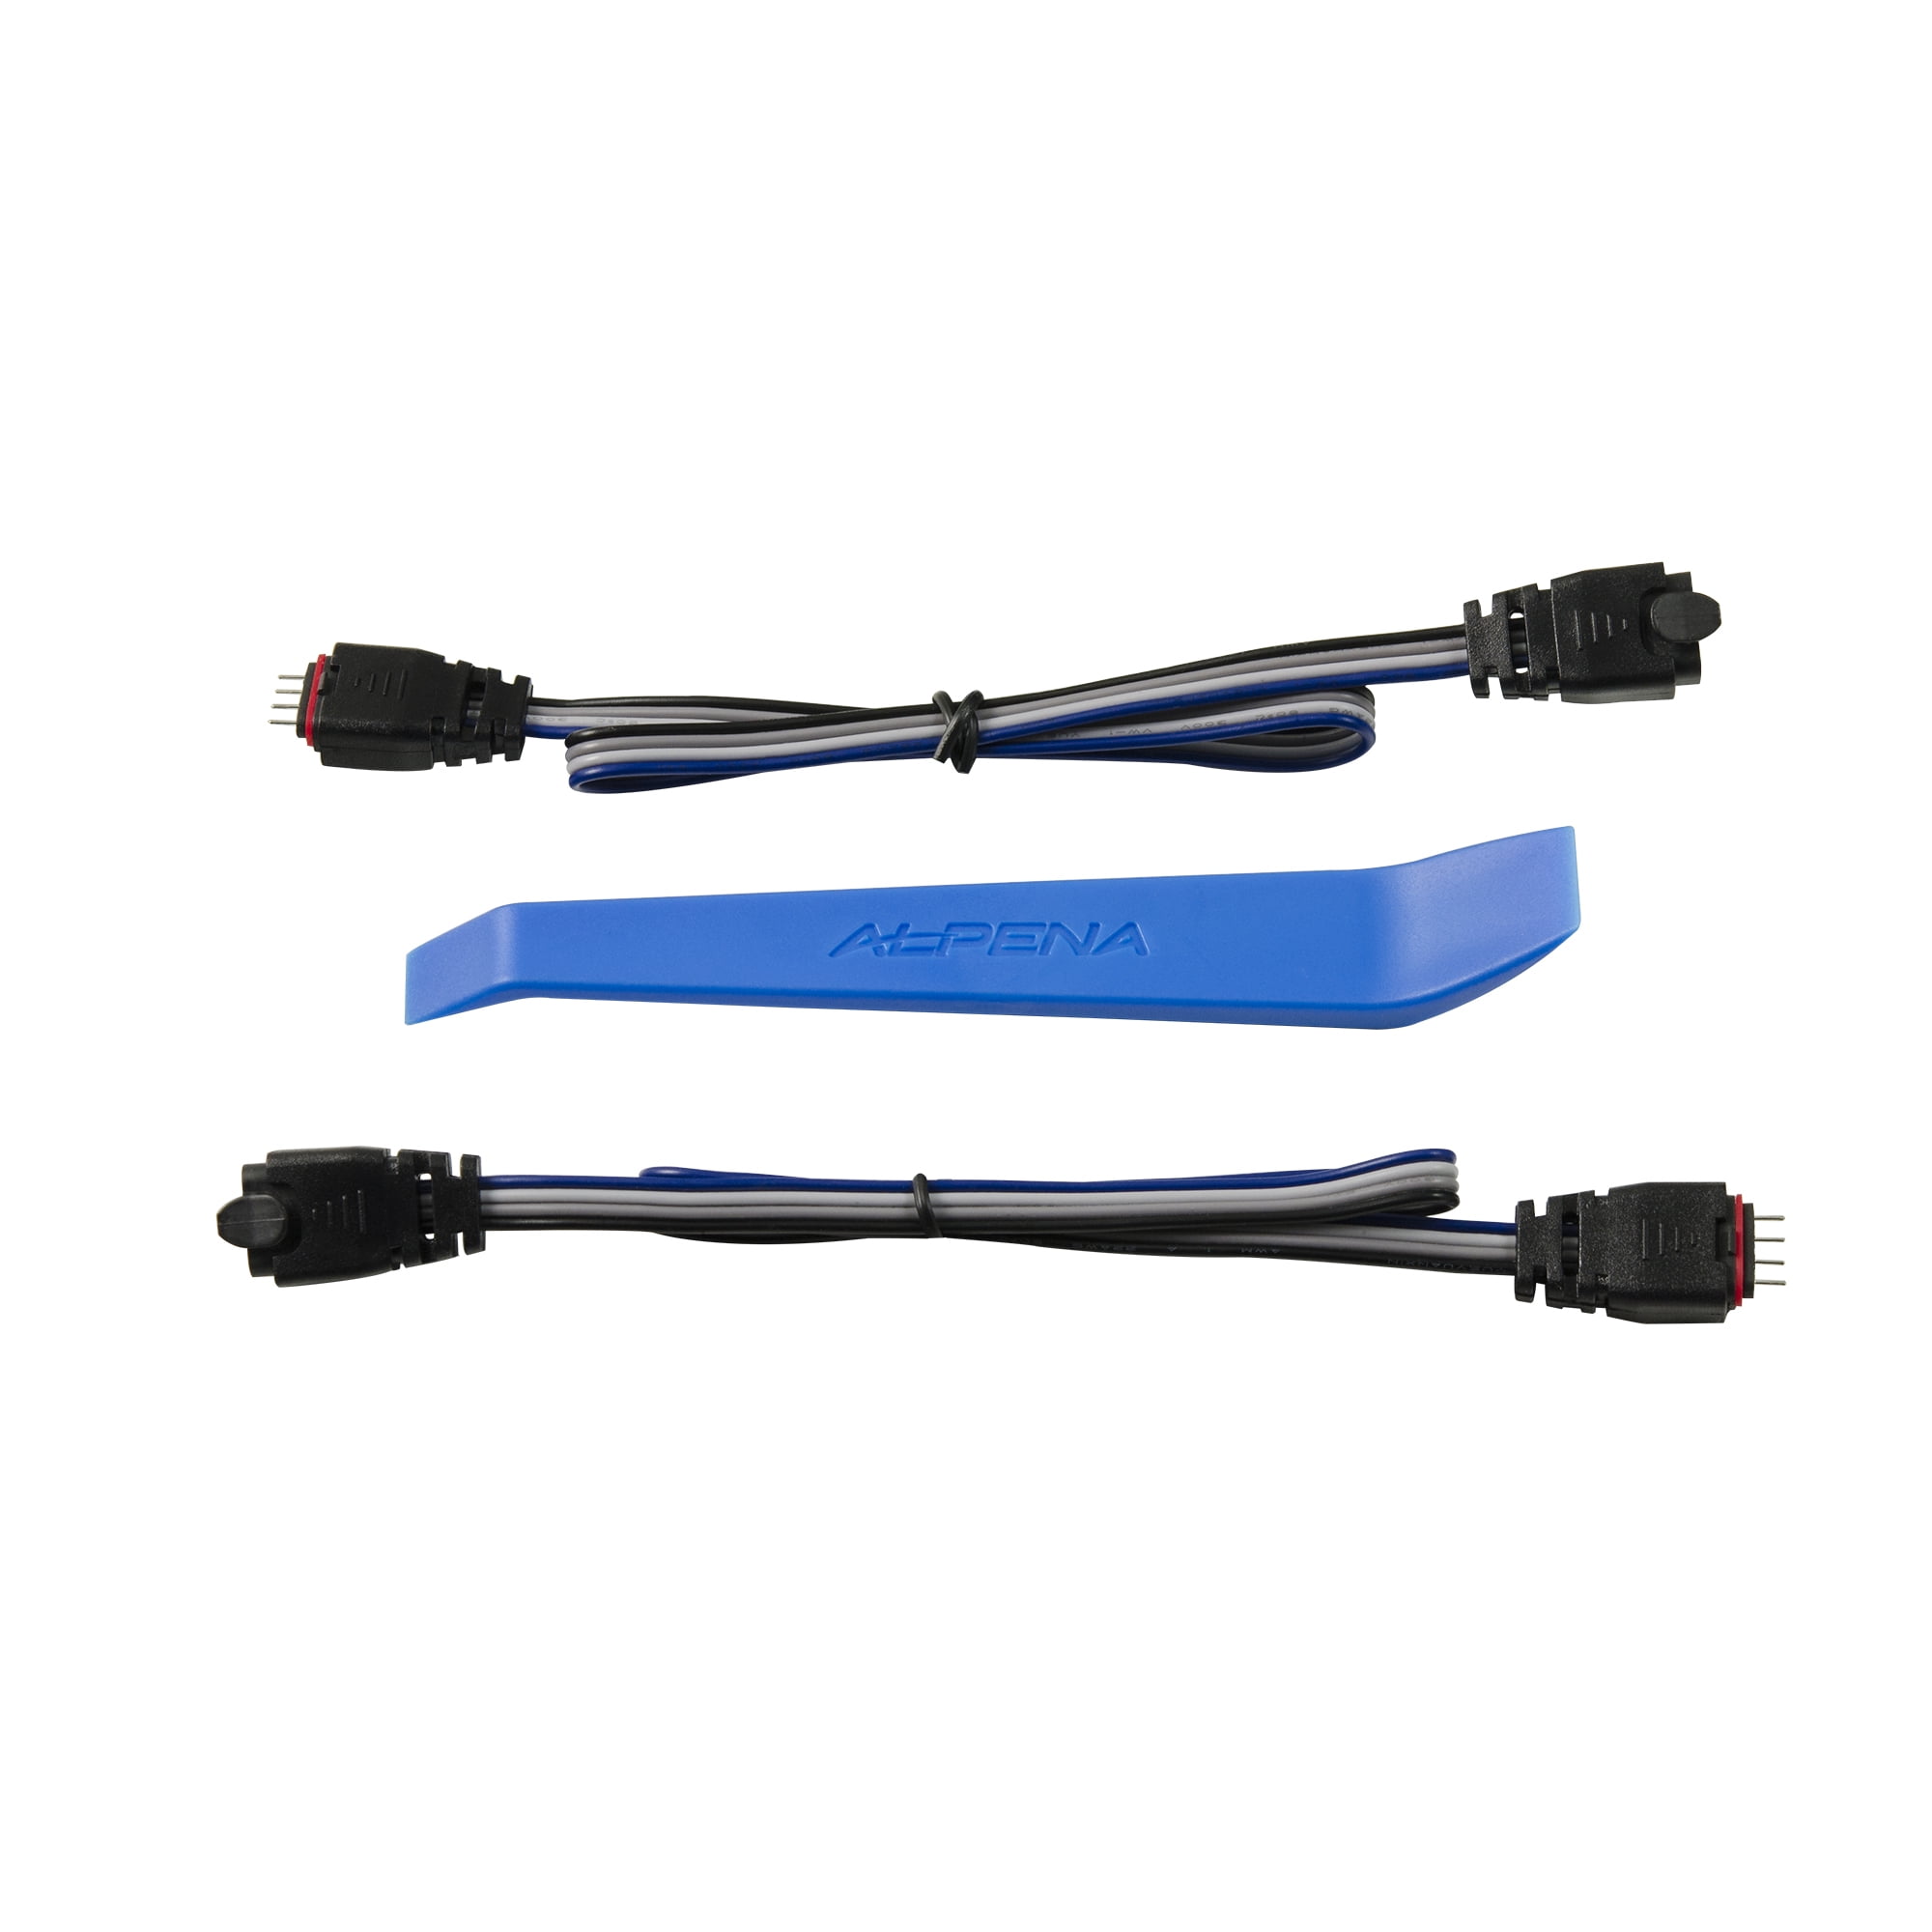 Alpena LED Strip Installation Kit with Two Extension Cables Plus Bonus Trim Tool, 77329